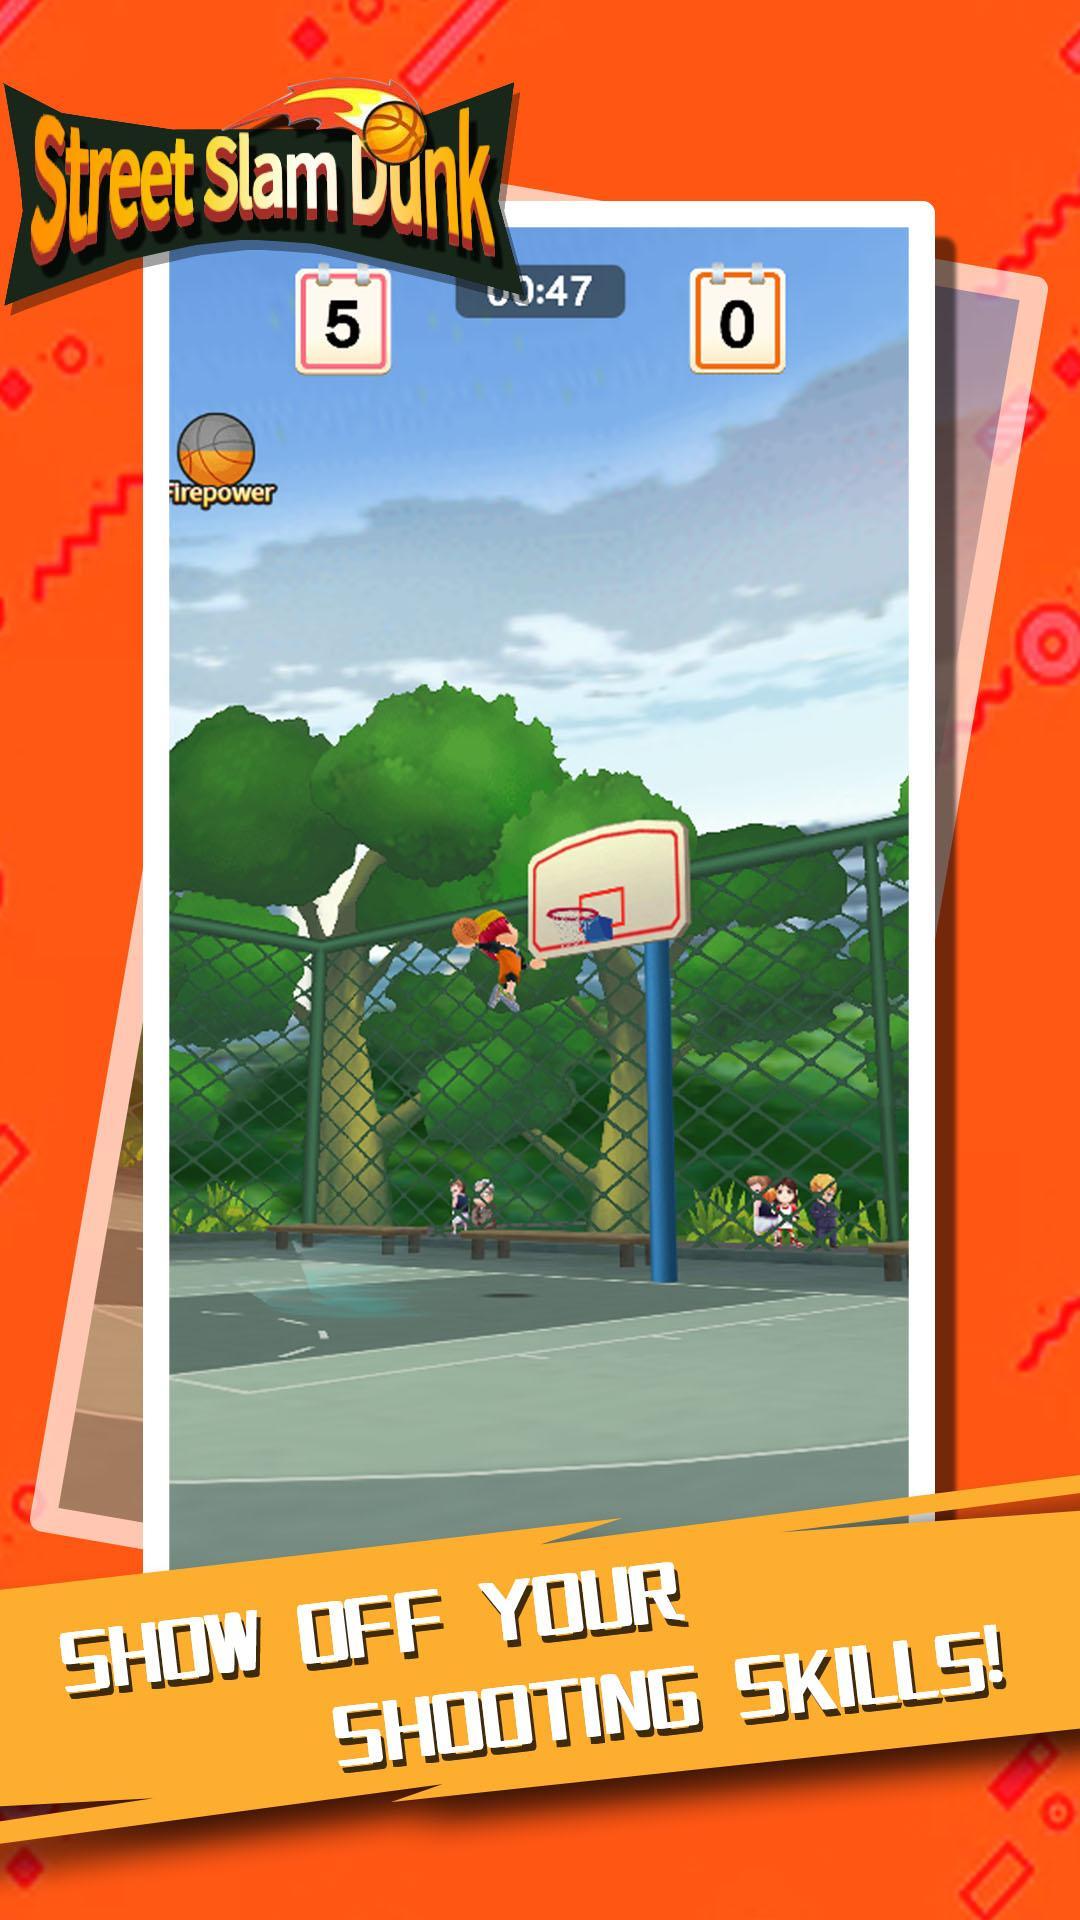 Screenshot 1 of Street Slam Dunk: баскетбольный матч 3 на 3 1.0